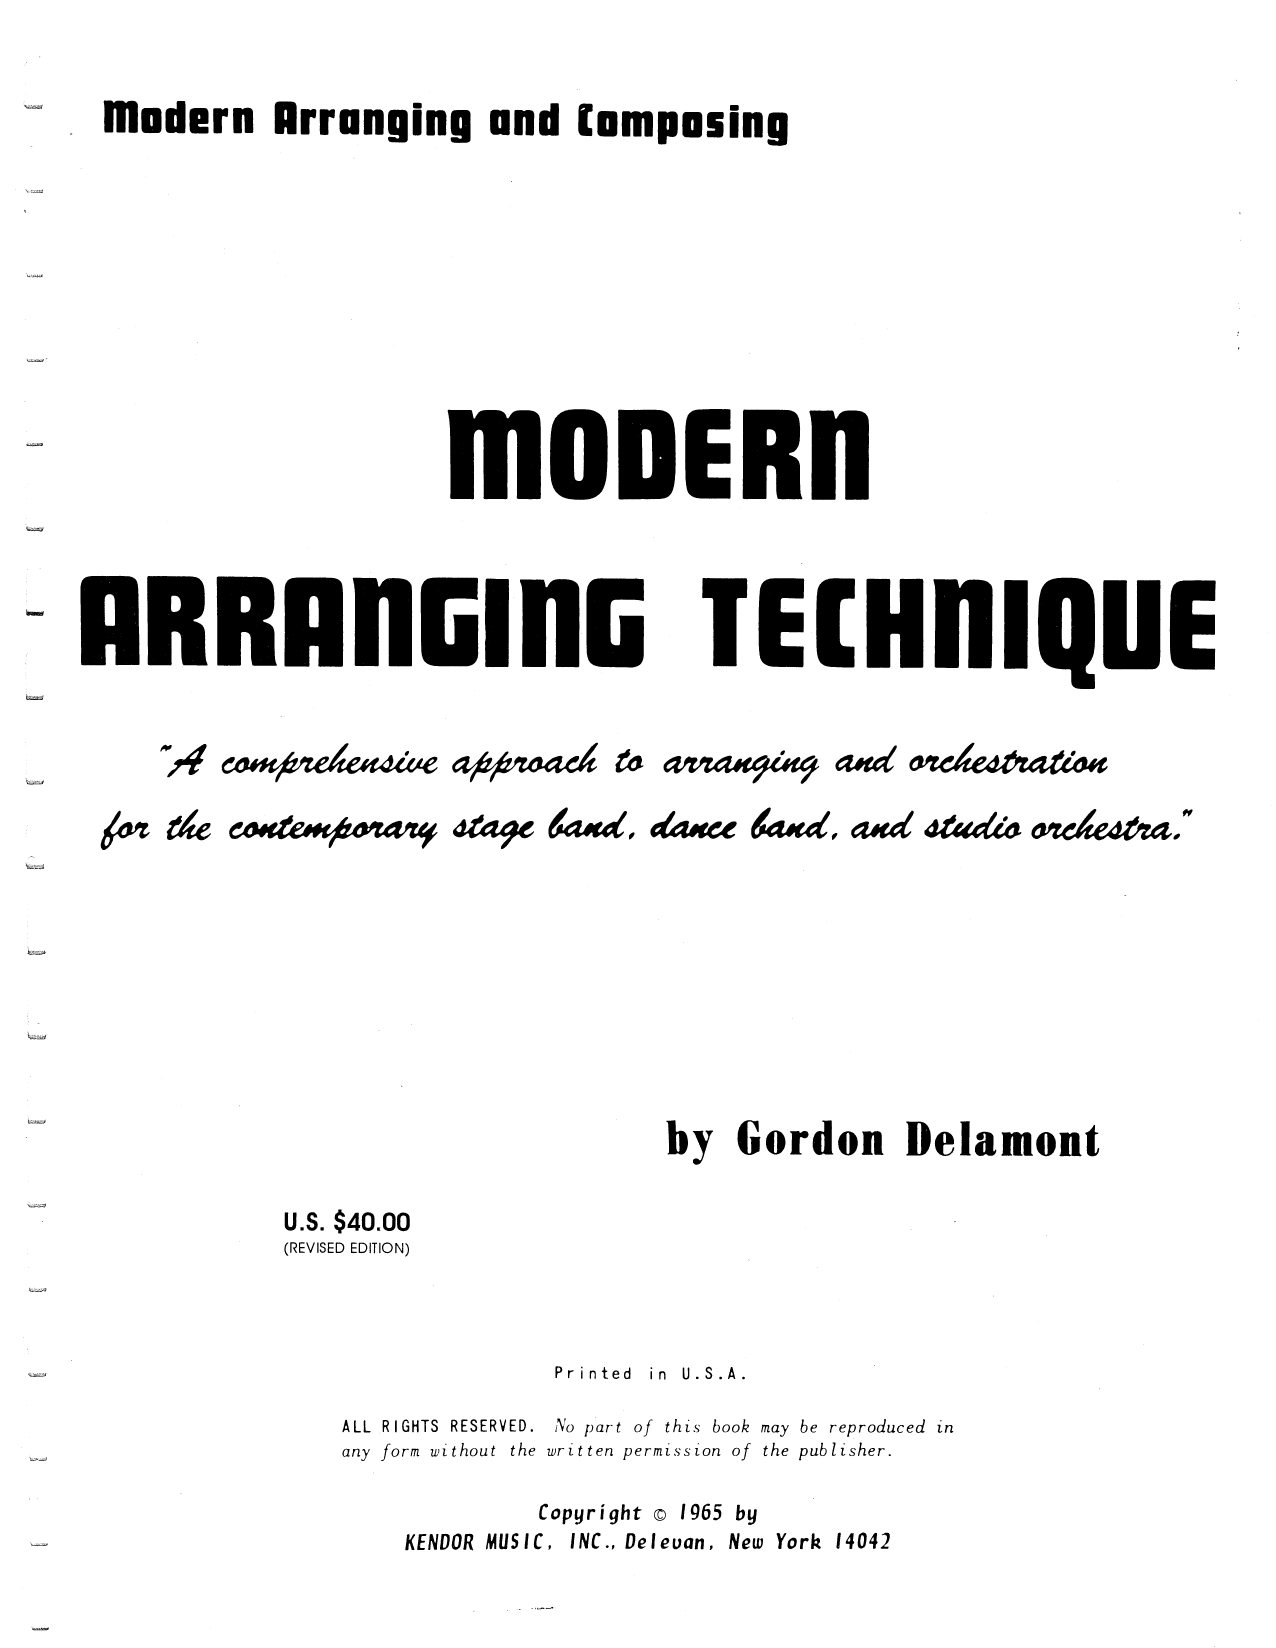 Download Gordon Delamont Modern Arranging Technique Sheet Music